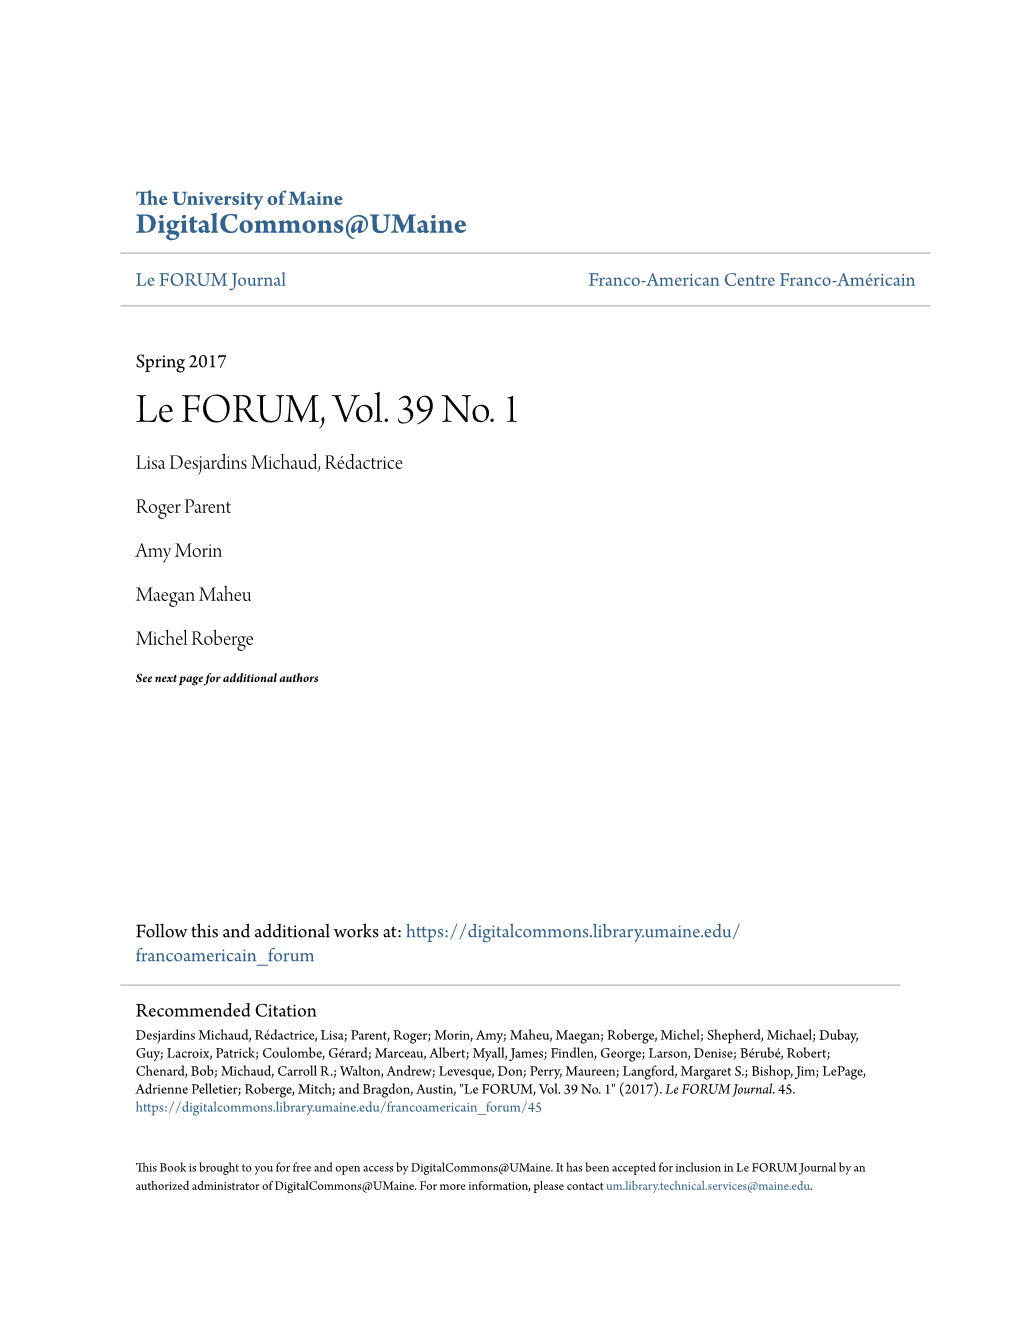 Le FORUM, Vol. 39 No. 1 Lisa Desjardins Michaud, Rédactrice